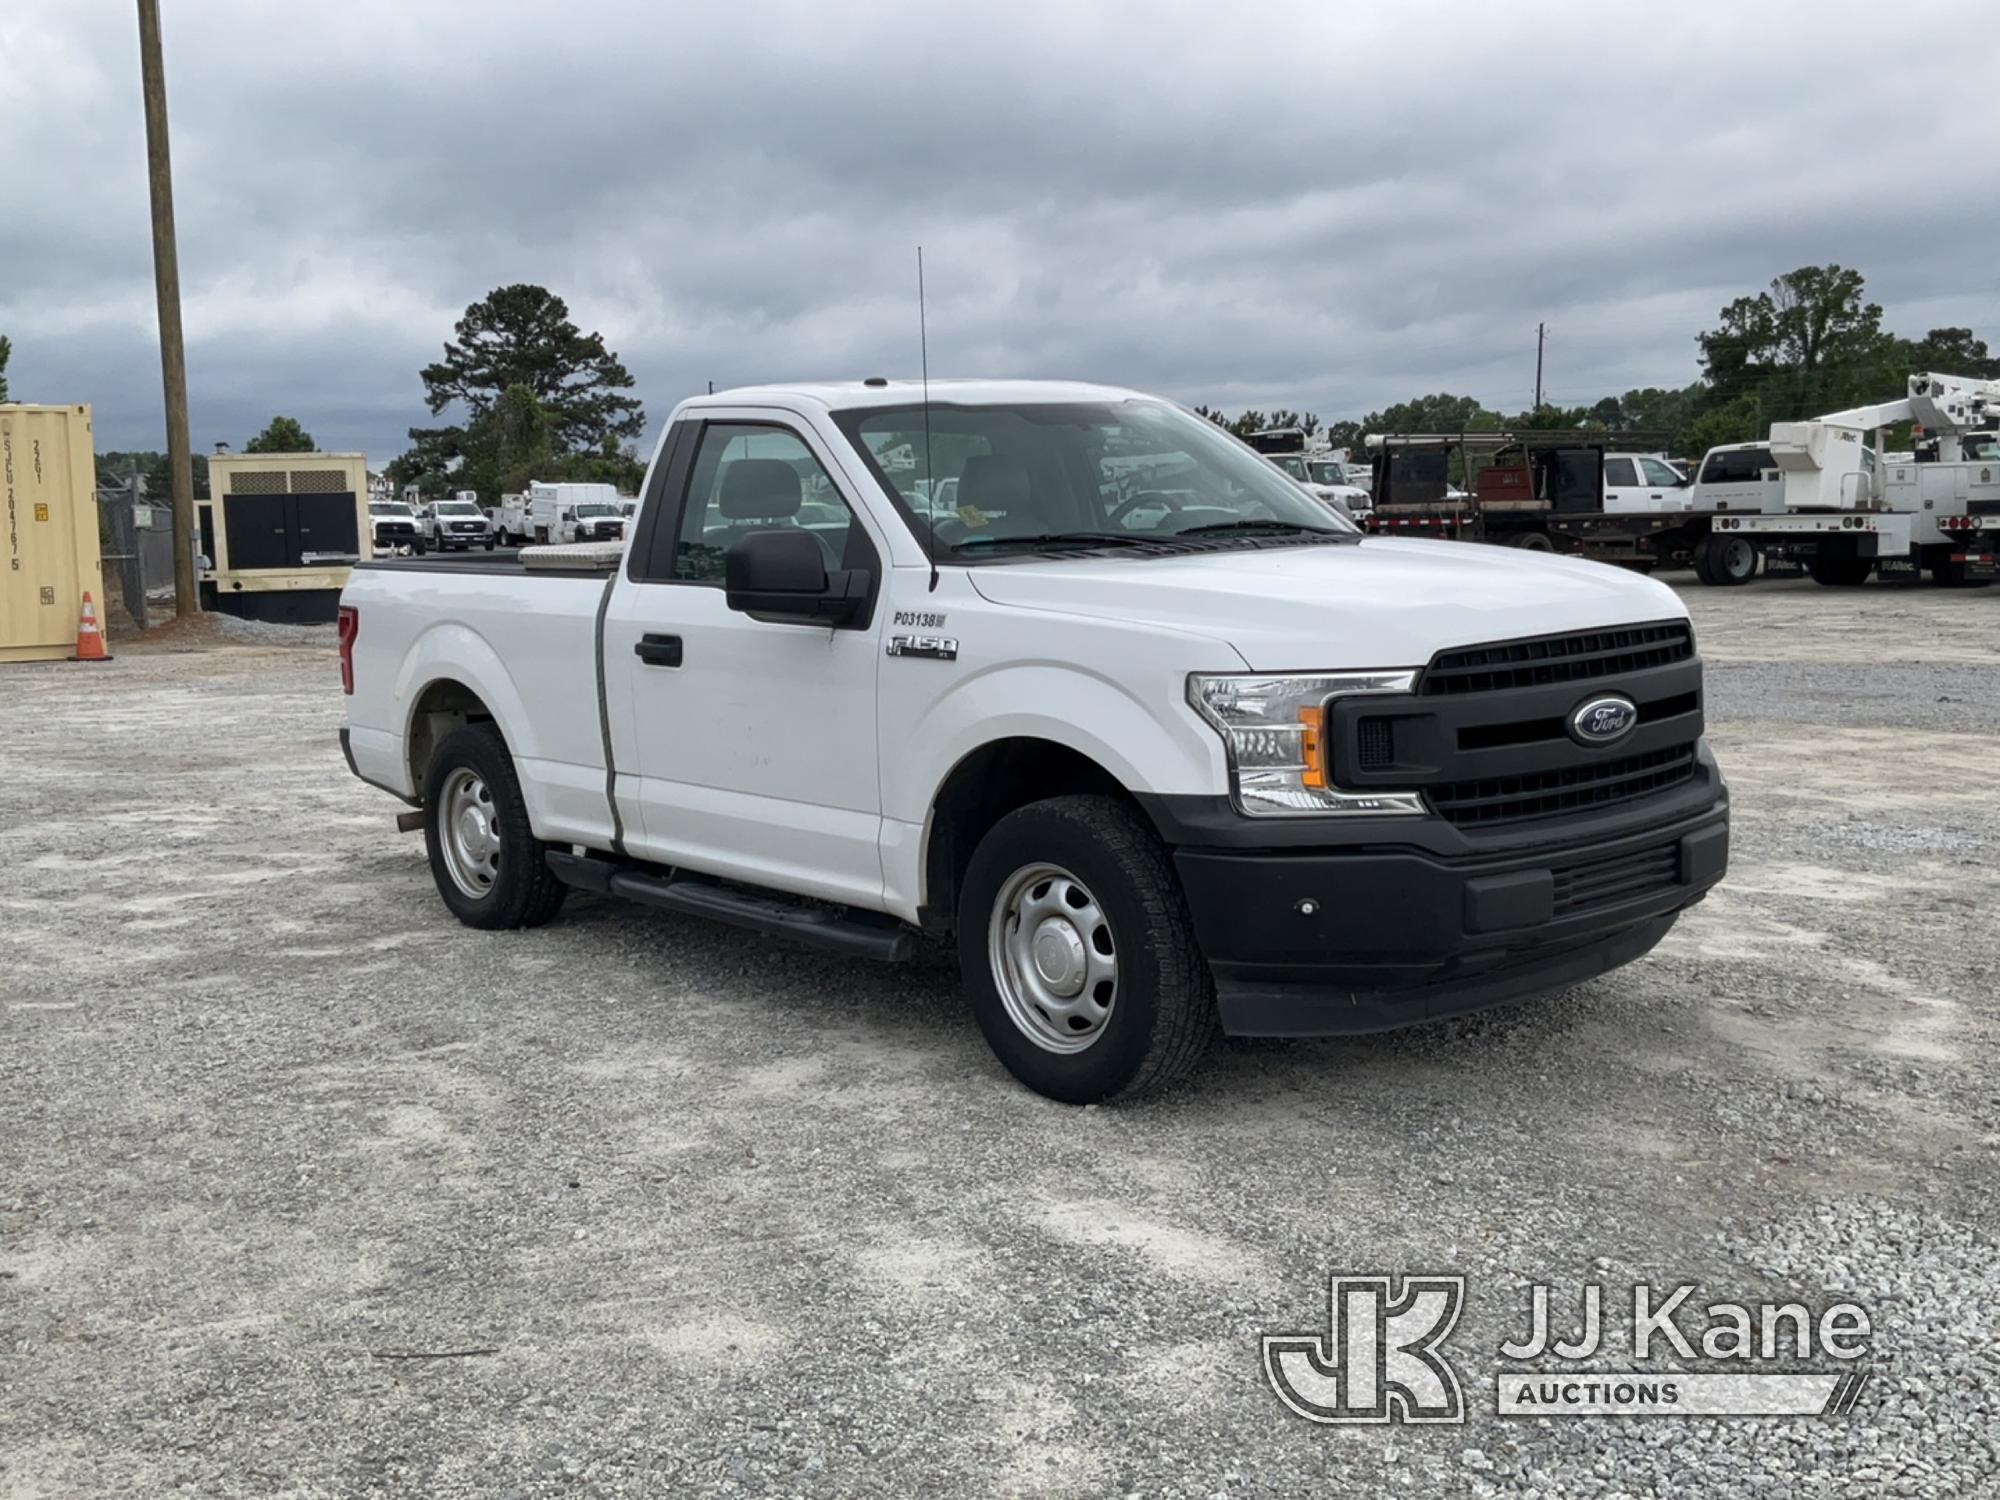 (Villa Rica, GA) 2018 Ford F150 Pickup Truck, (GA Power Unit) Runs & Moves